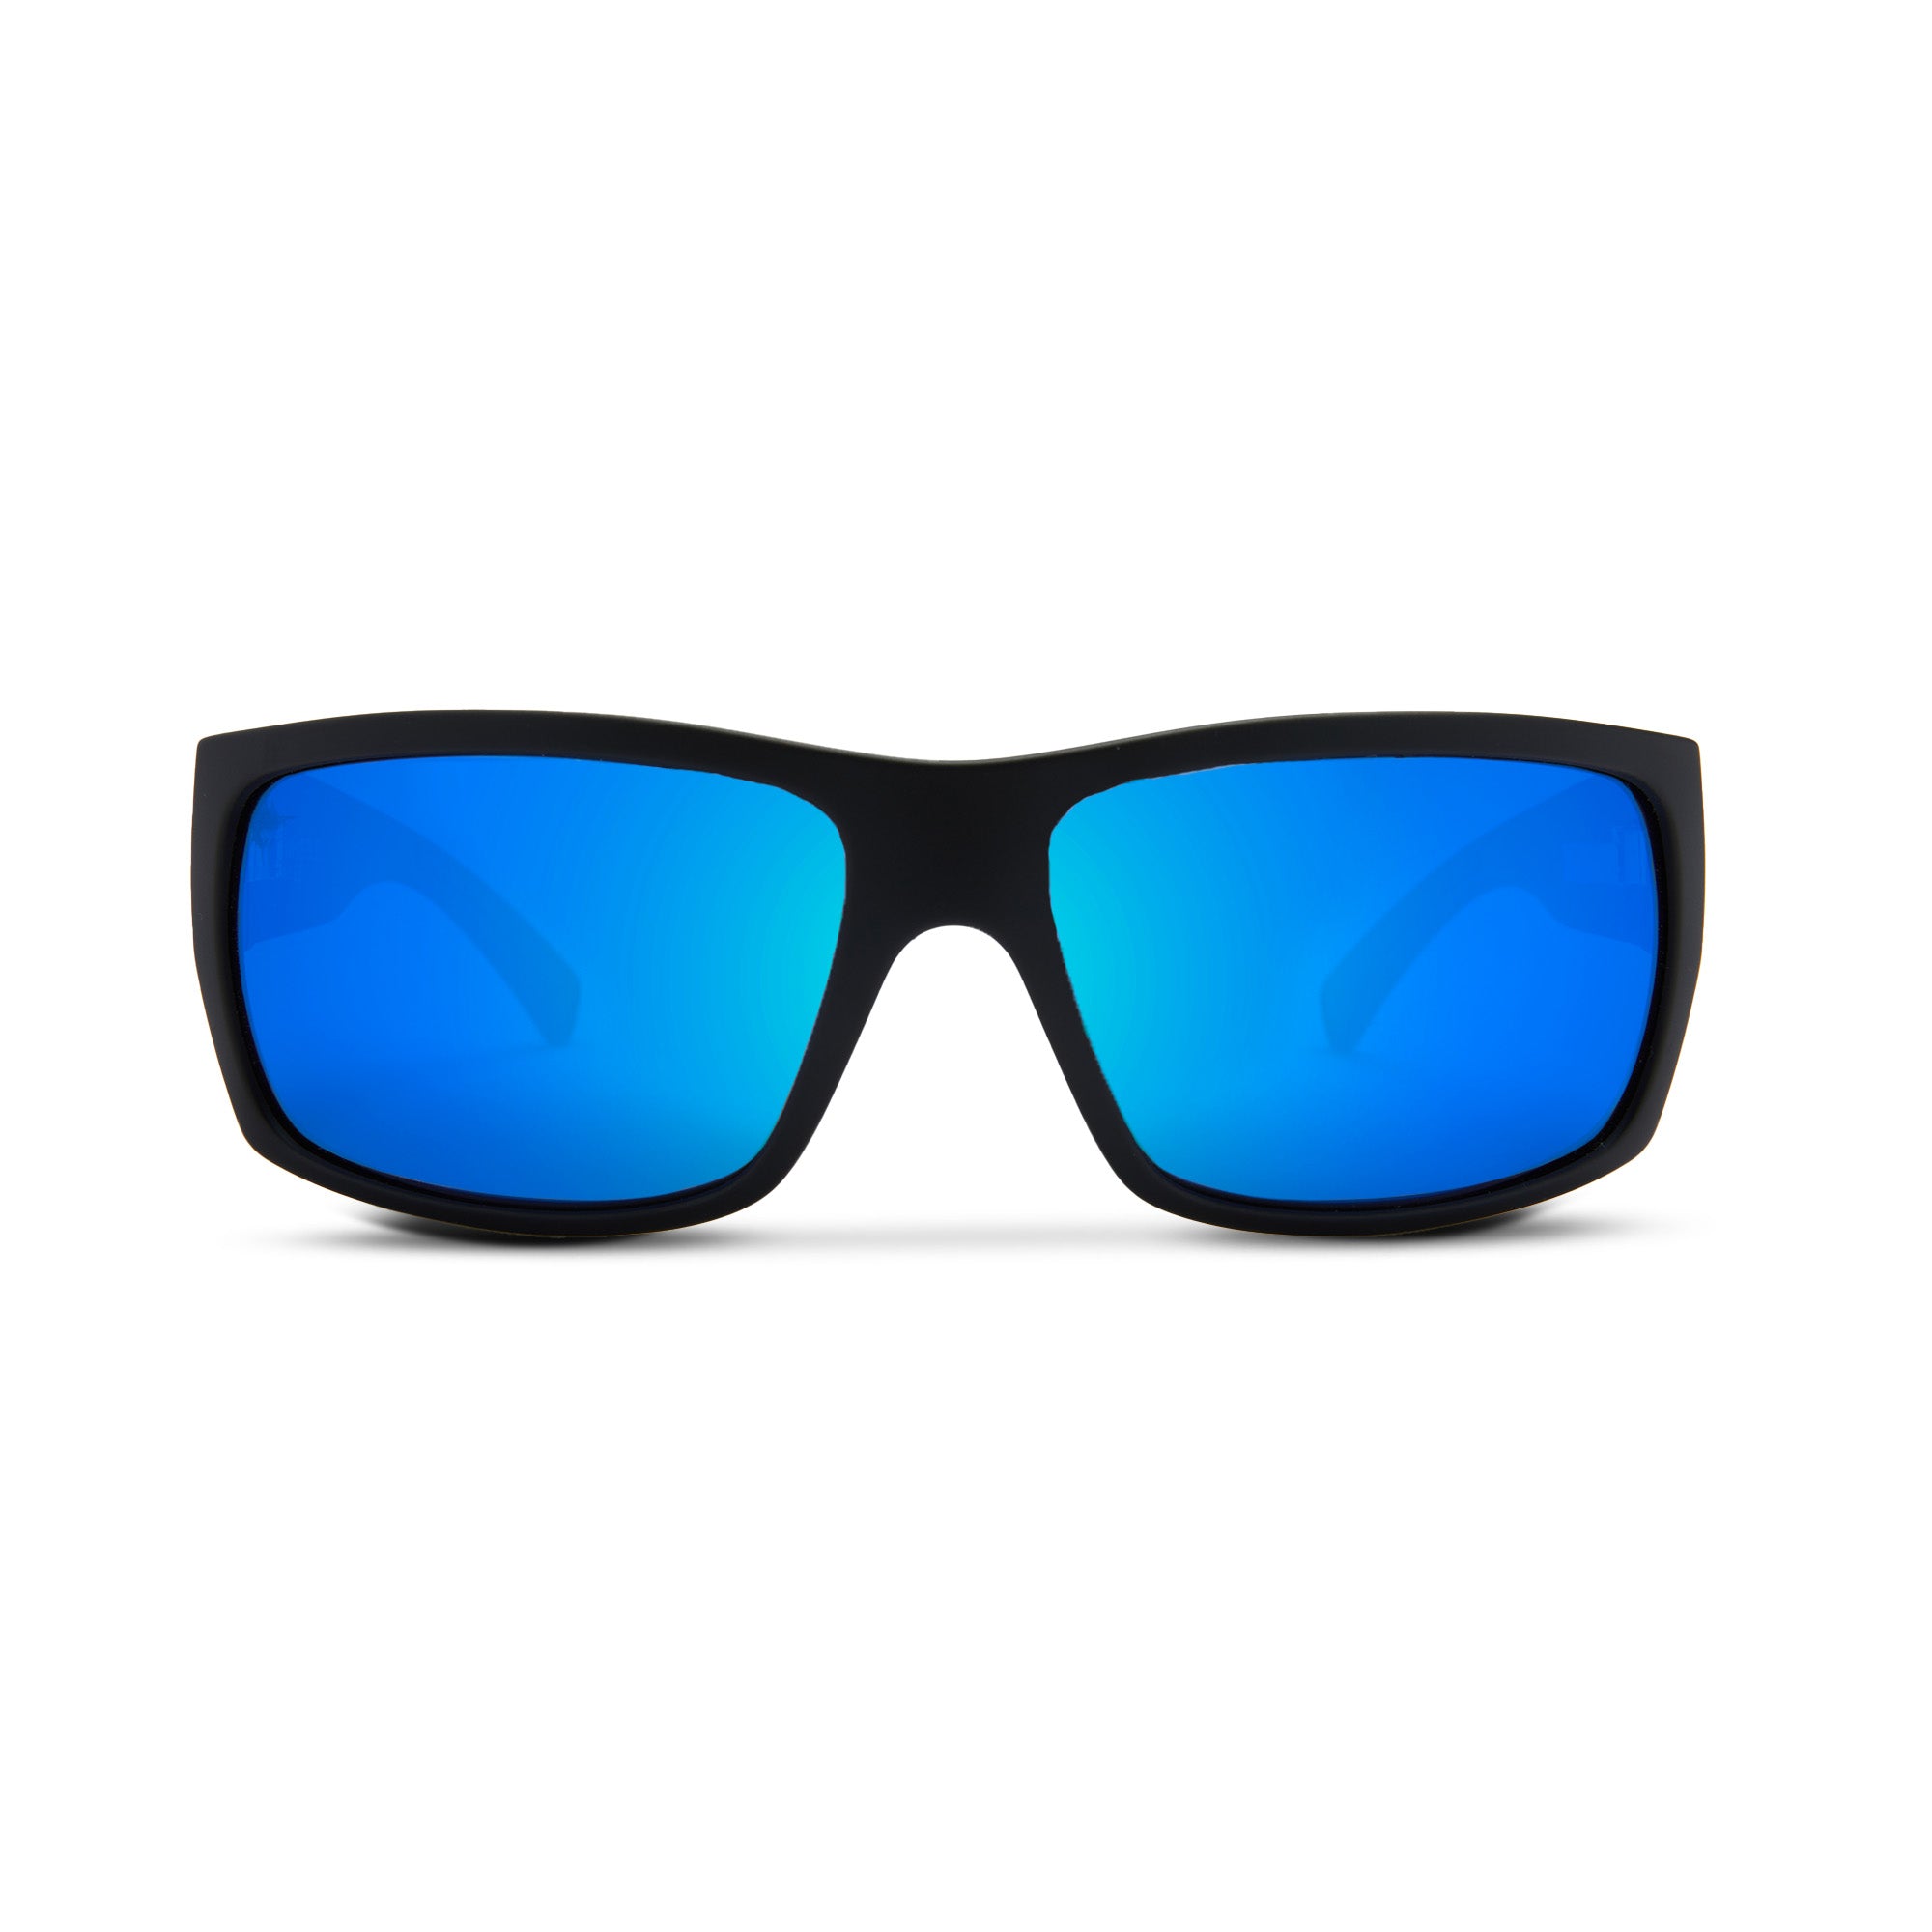 AVAWAY Polarized Aviator Sunglasses for Women Men, Kuwait